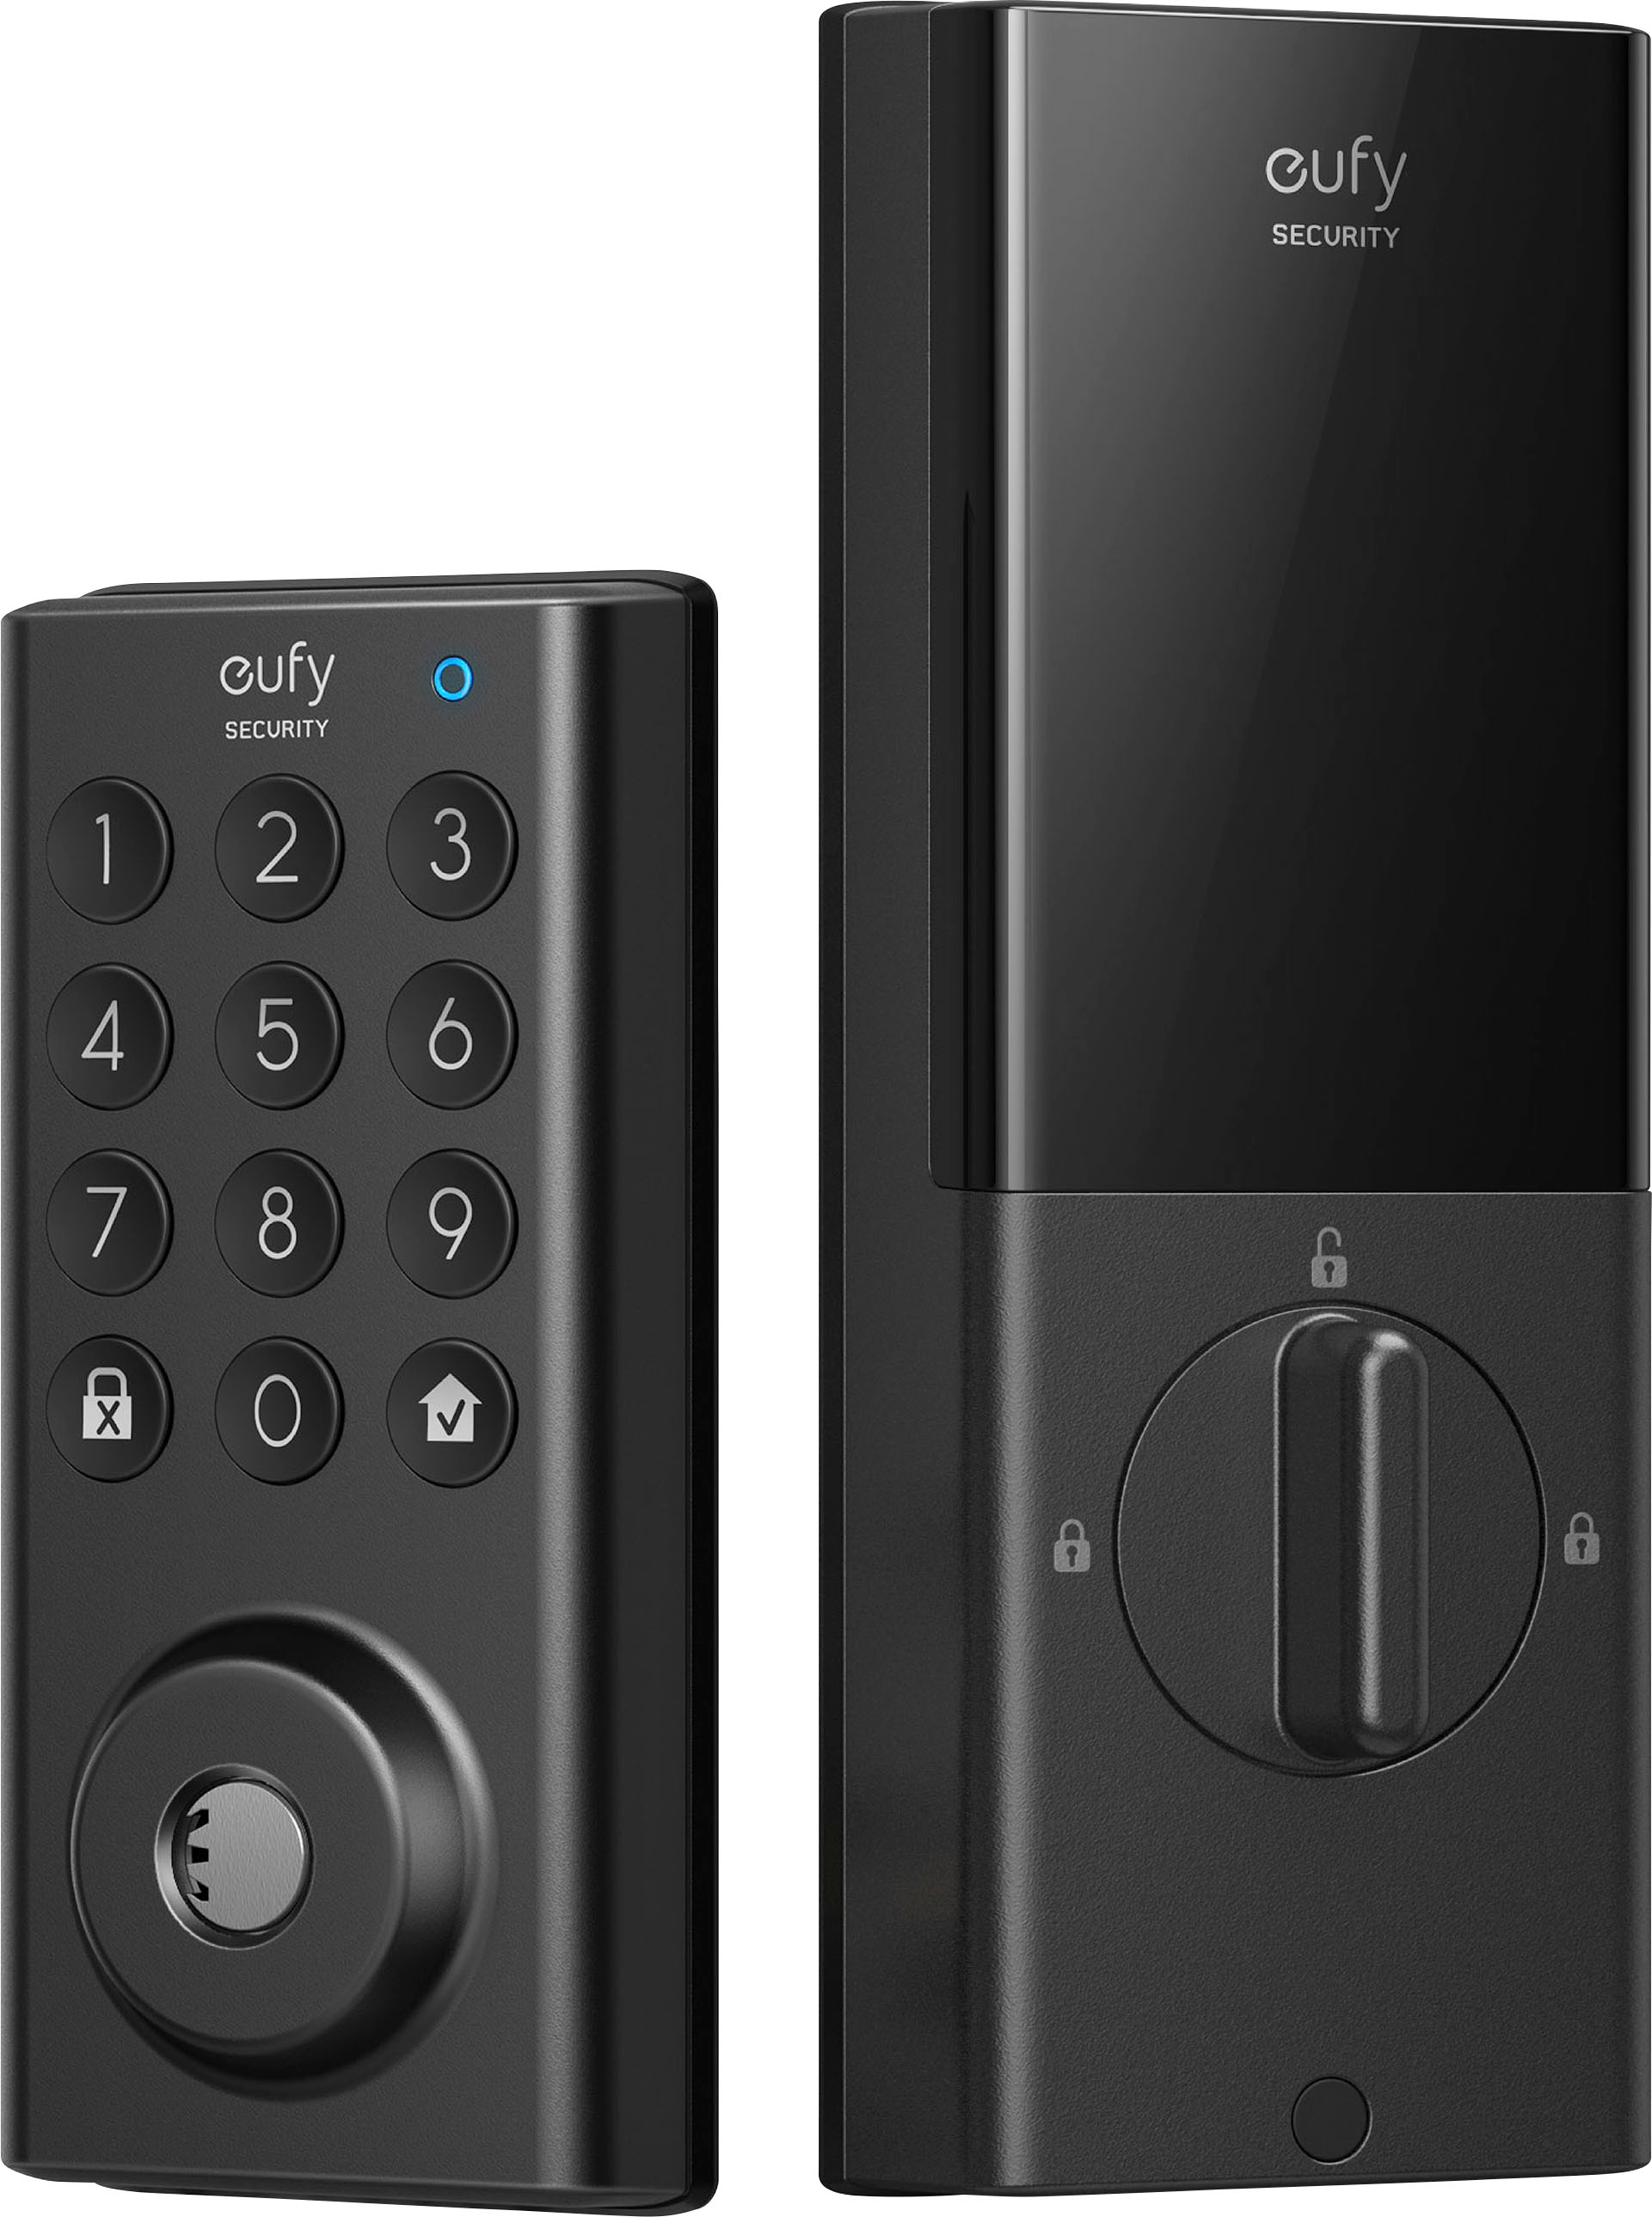 Angle View: eufy Security - Solo Smart Lock Wi-Fi Deadbolt with App/Keypad/Key Access - Black